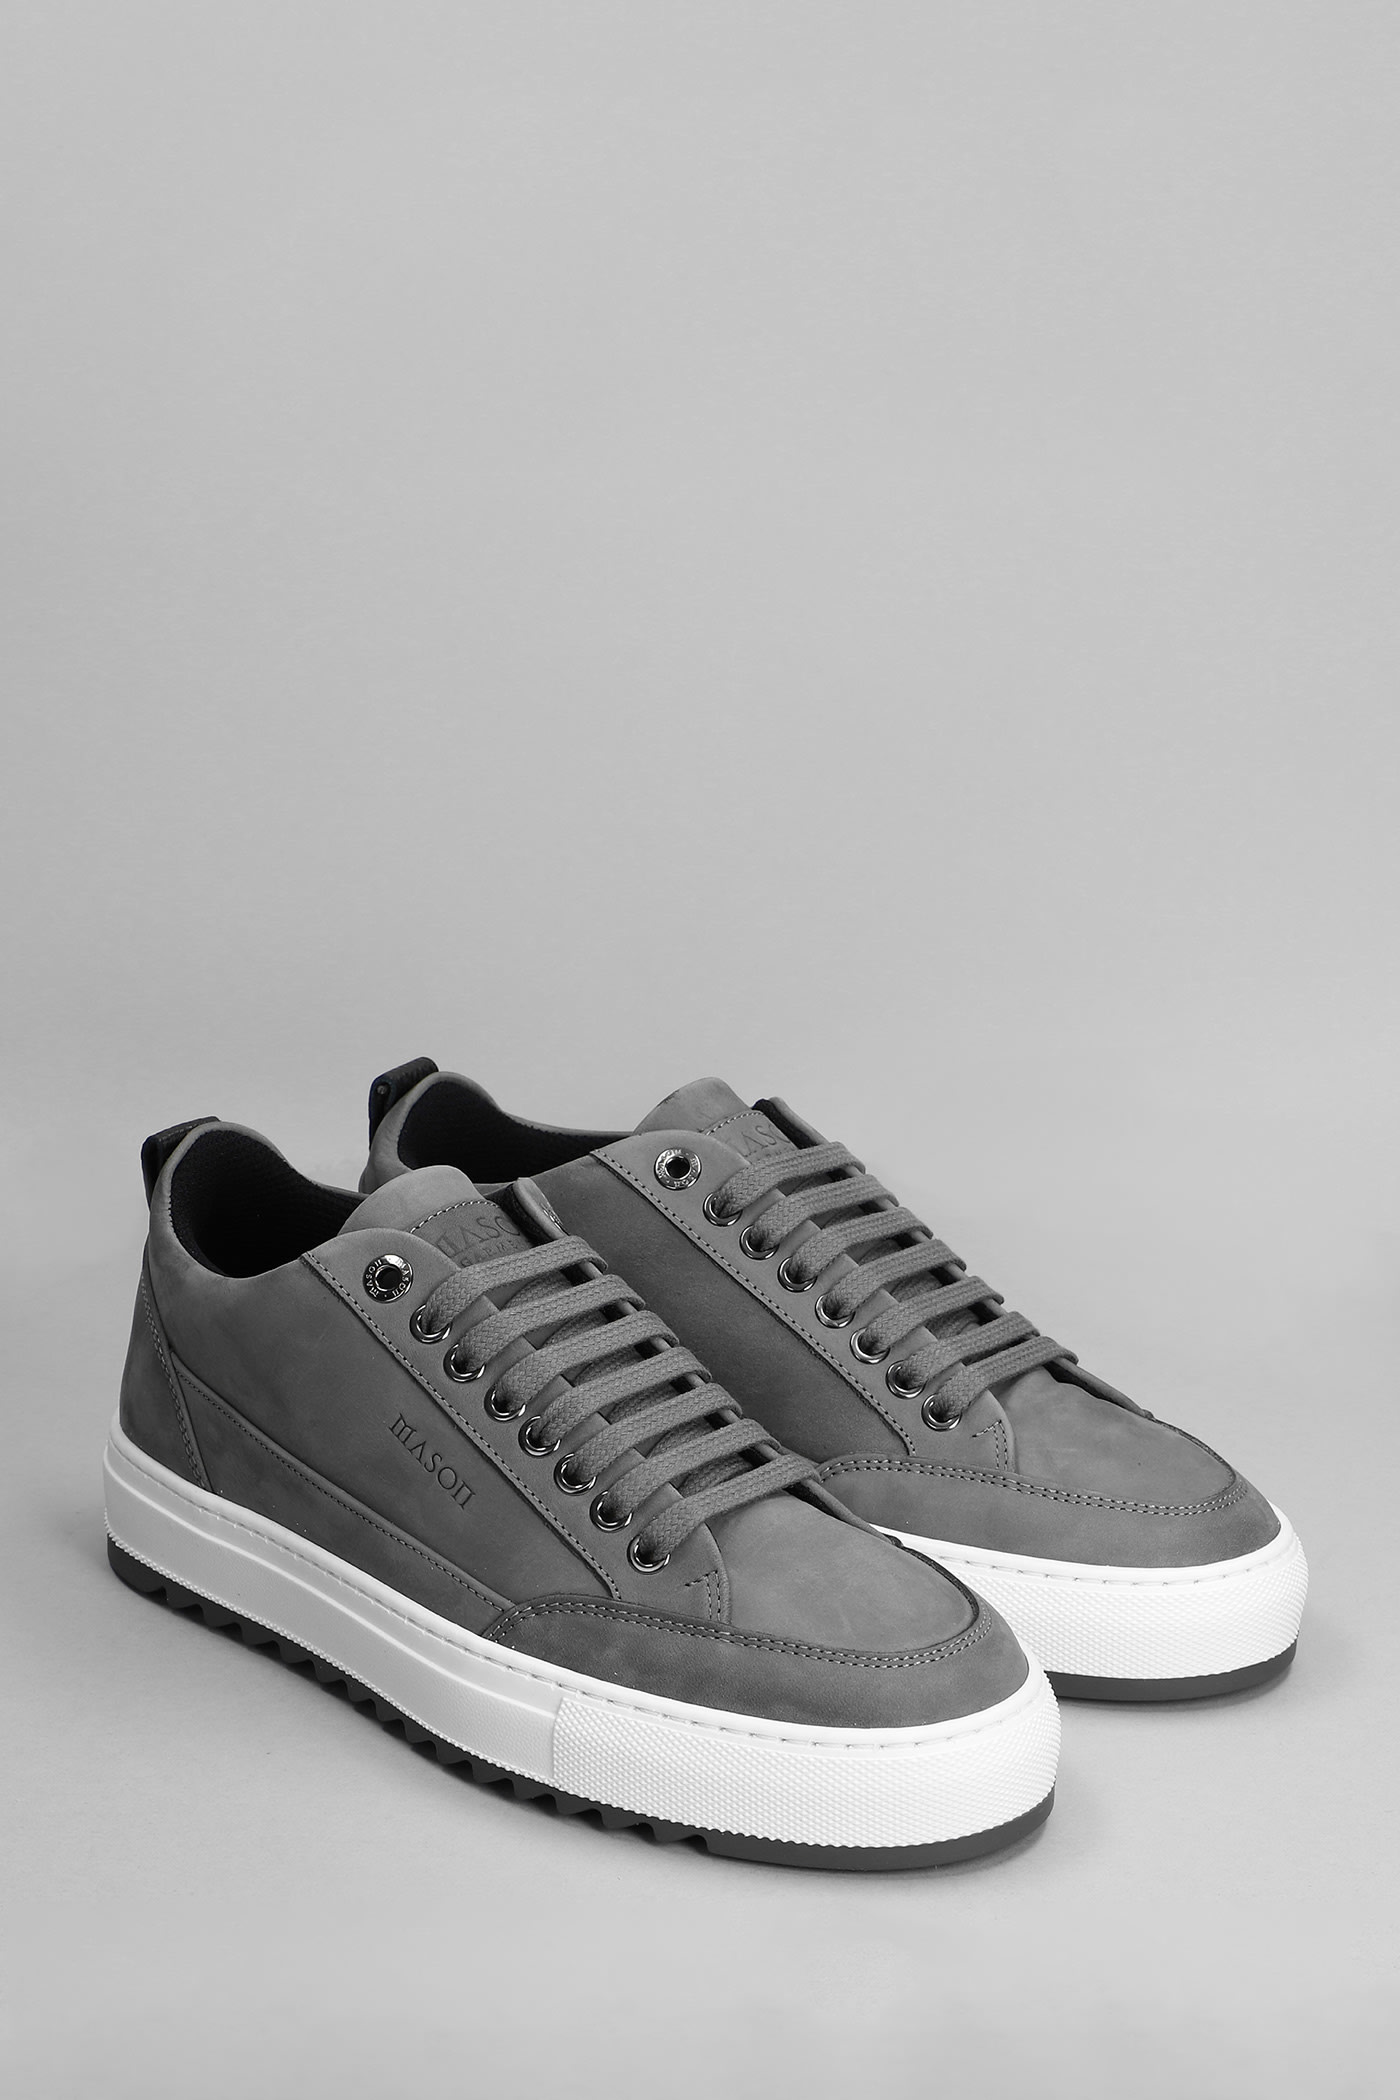 Mason Garments Tia Sneakers In Grey Nubuck | ModeSens